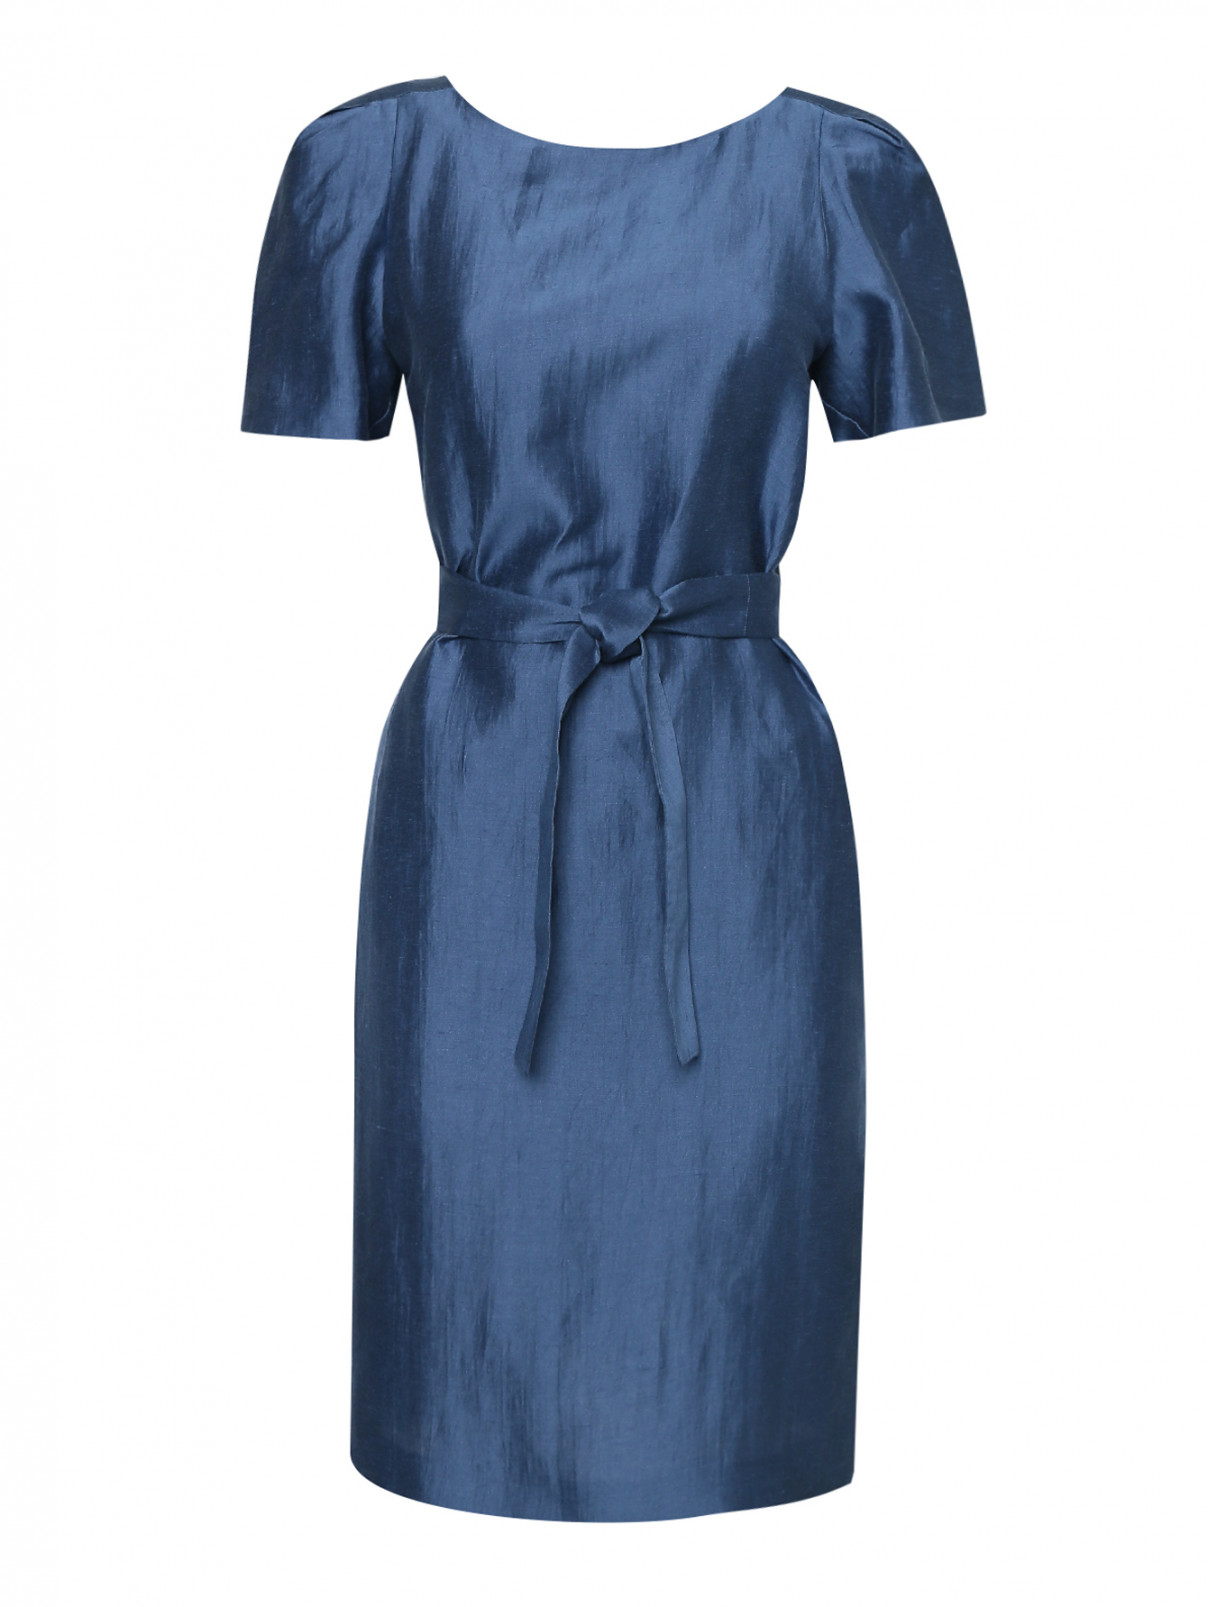 Платье изо льна , со складками на рукавах Weekend Max Mara  –  Общий вид  – Цвет:  Синий